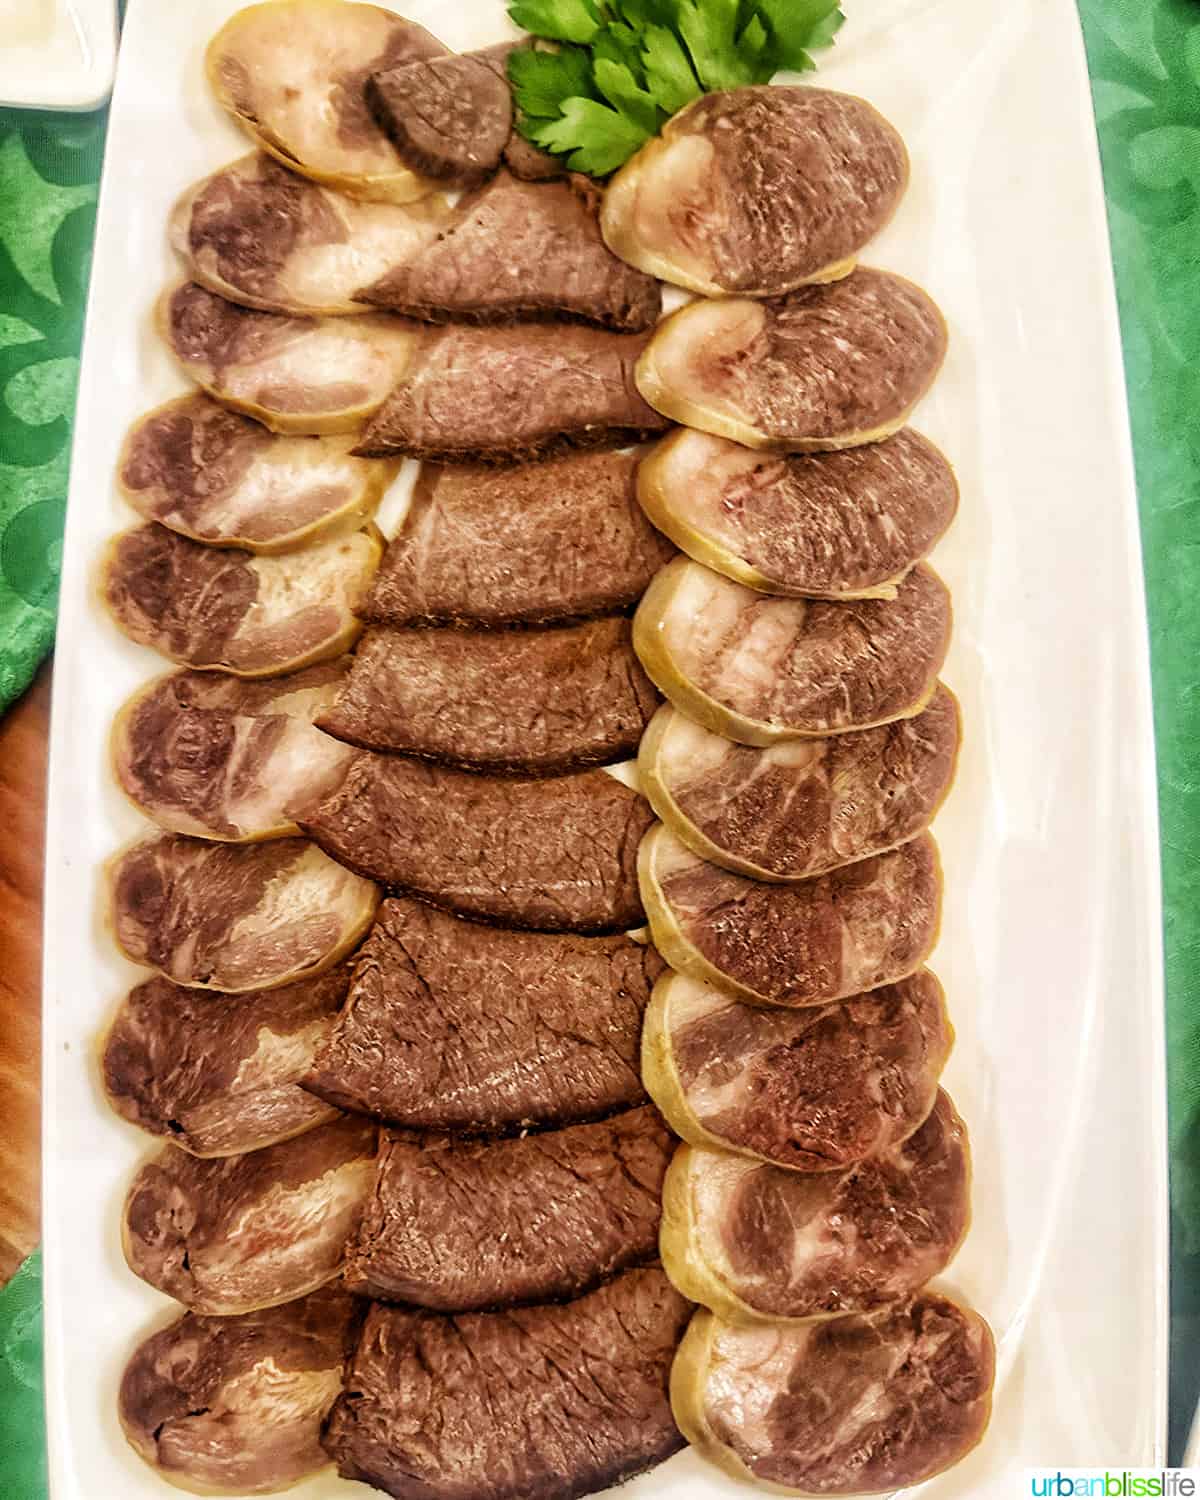 white platter full of kazy, a boiled horse meat sausage sliced, popular dish in Kazakhstan.